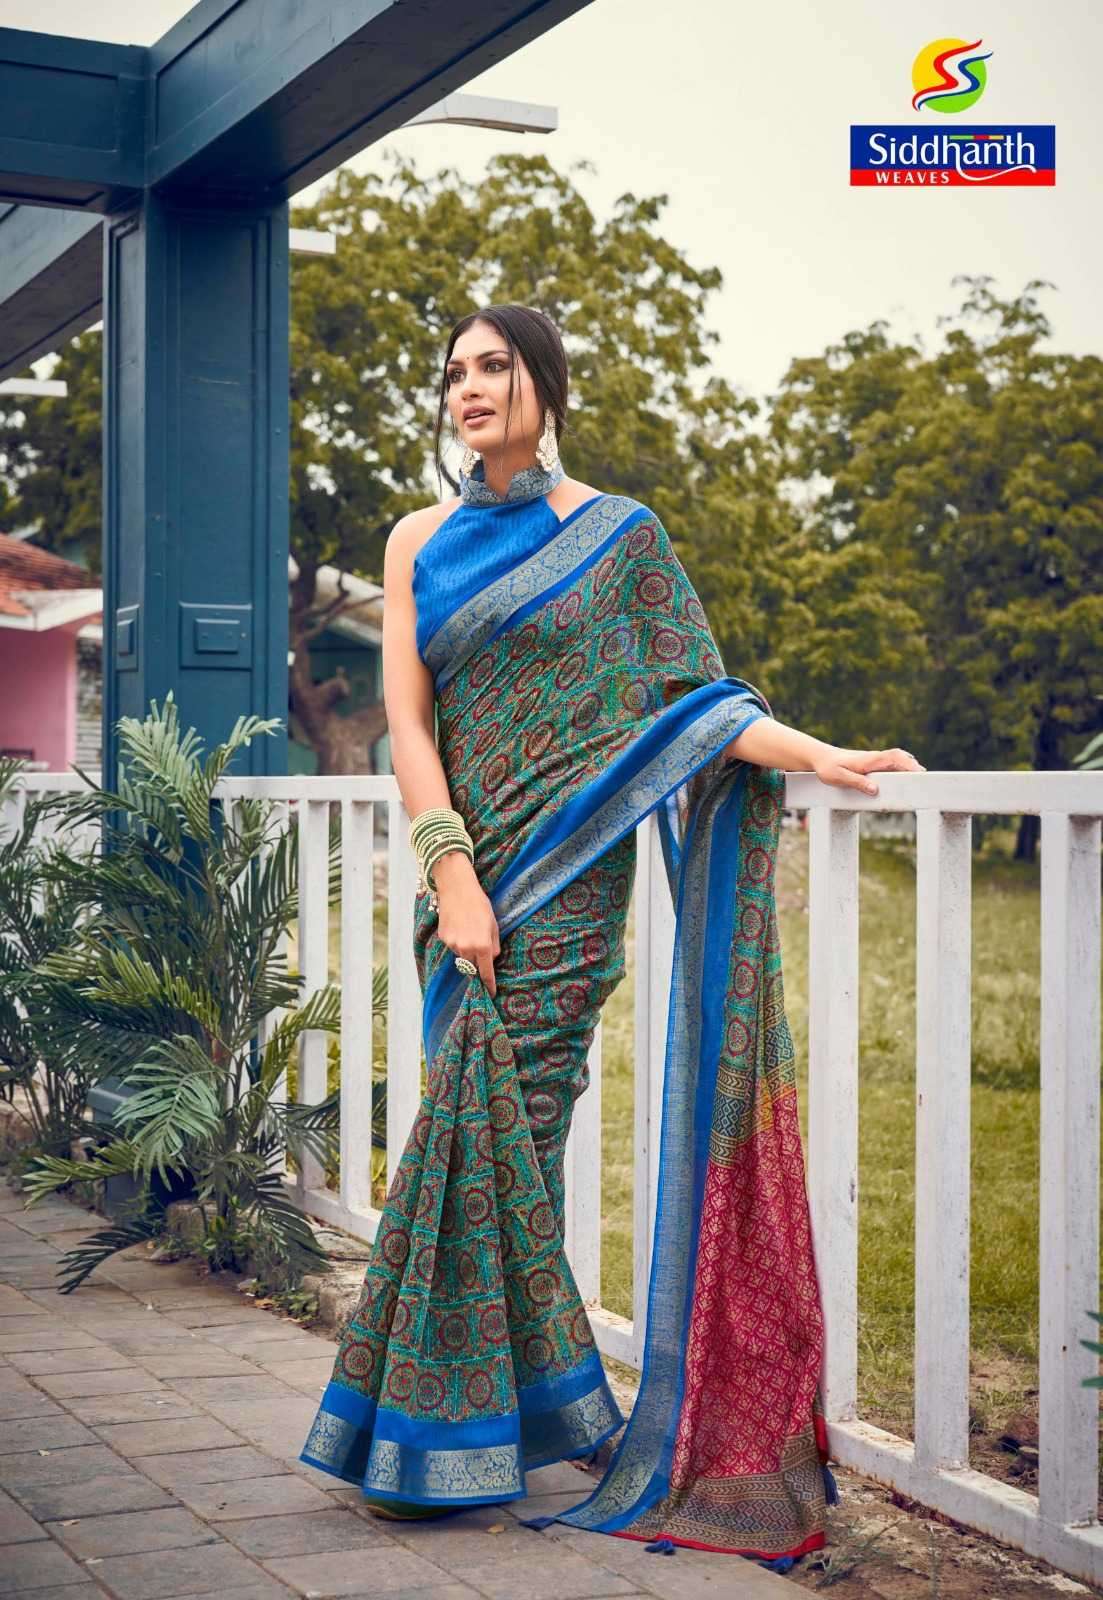 Buy SAI PAVAN HANDLOOMS Chirala Cotton Saree for Women (Multi-Coloured) at  Amazon.in